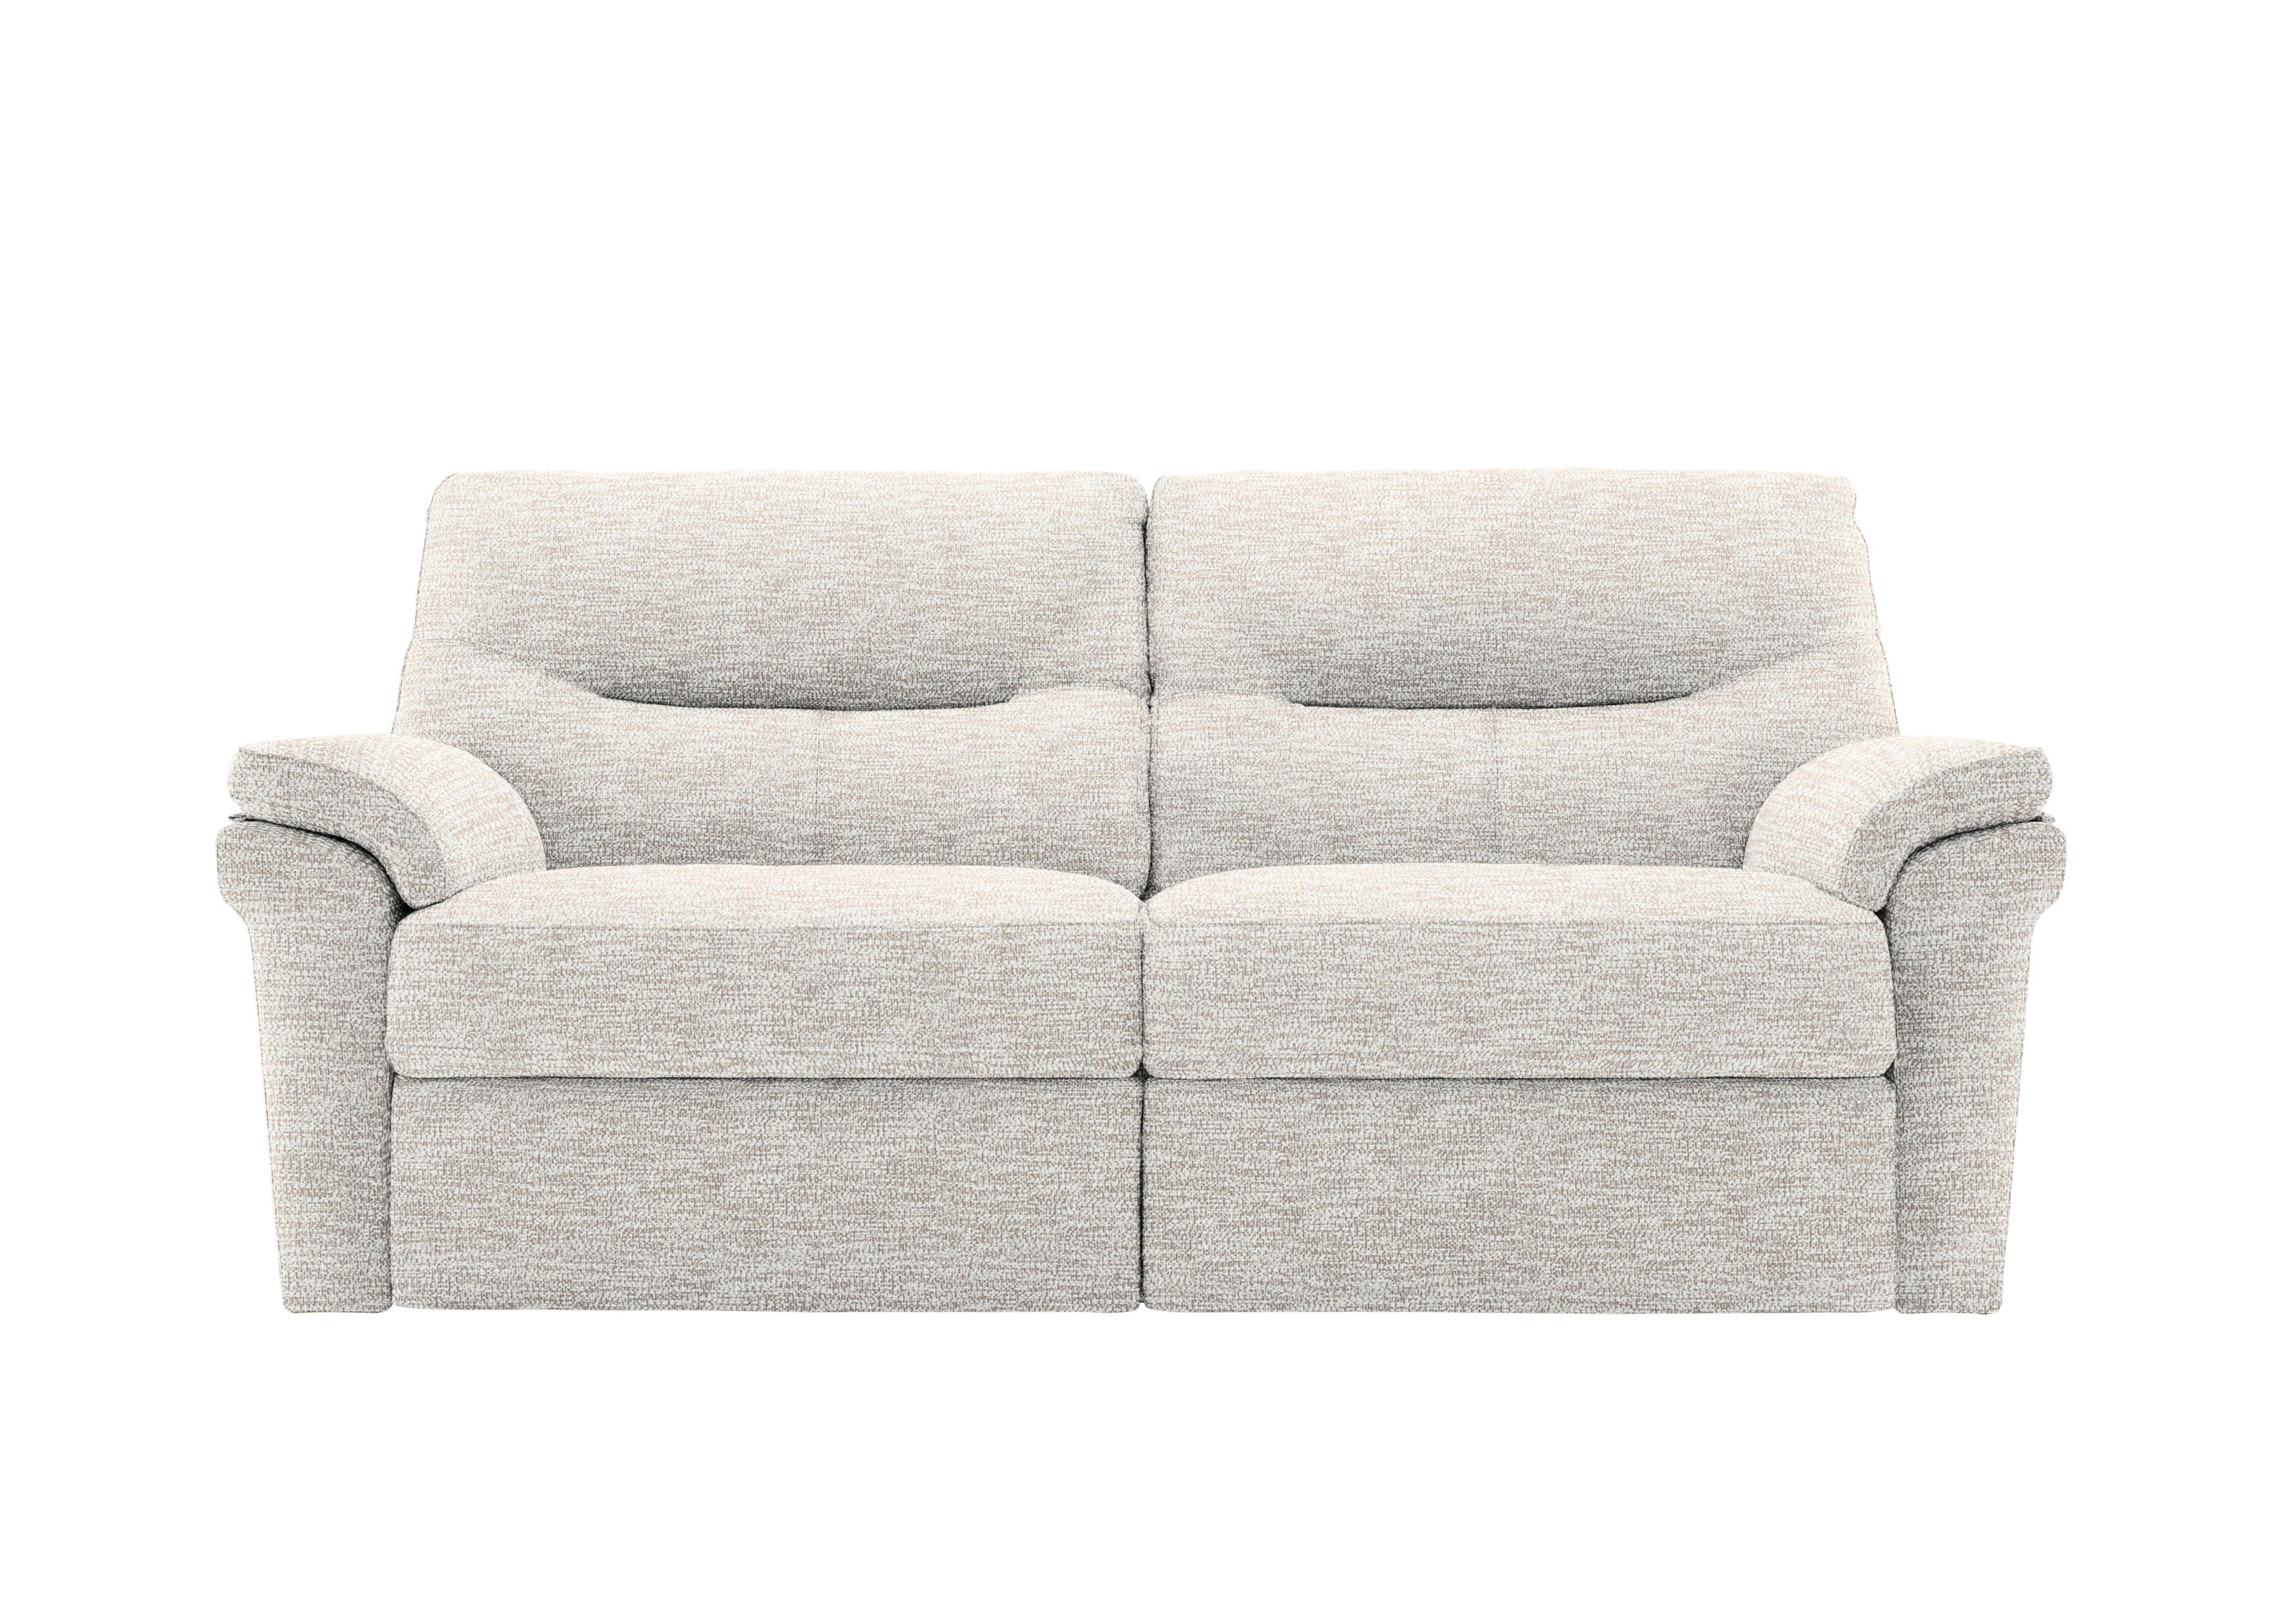 Seattle 3 Seater Fabric Sofa in C931 Rush Cream on Furniture Village